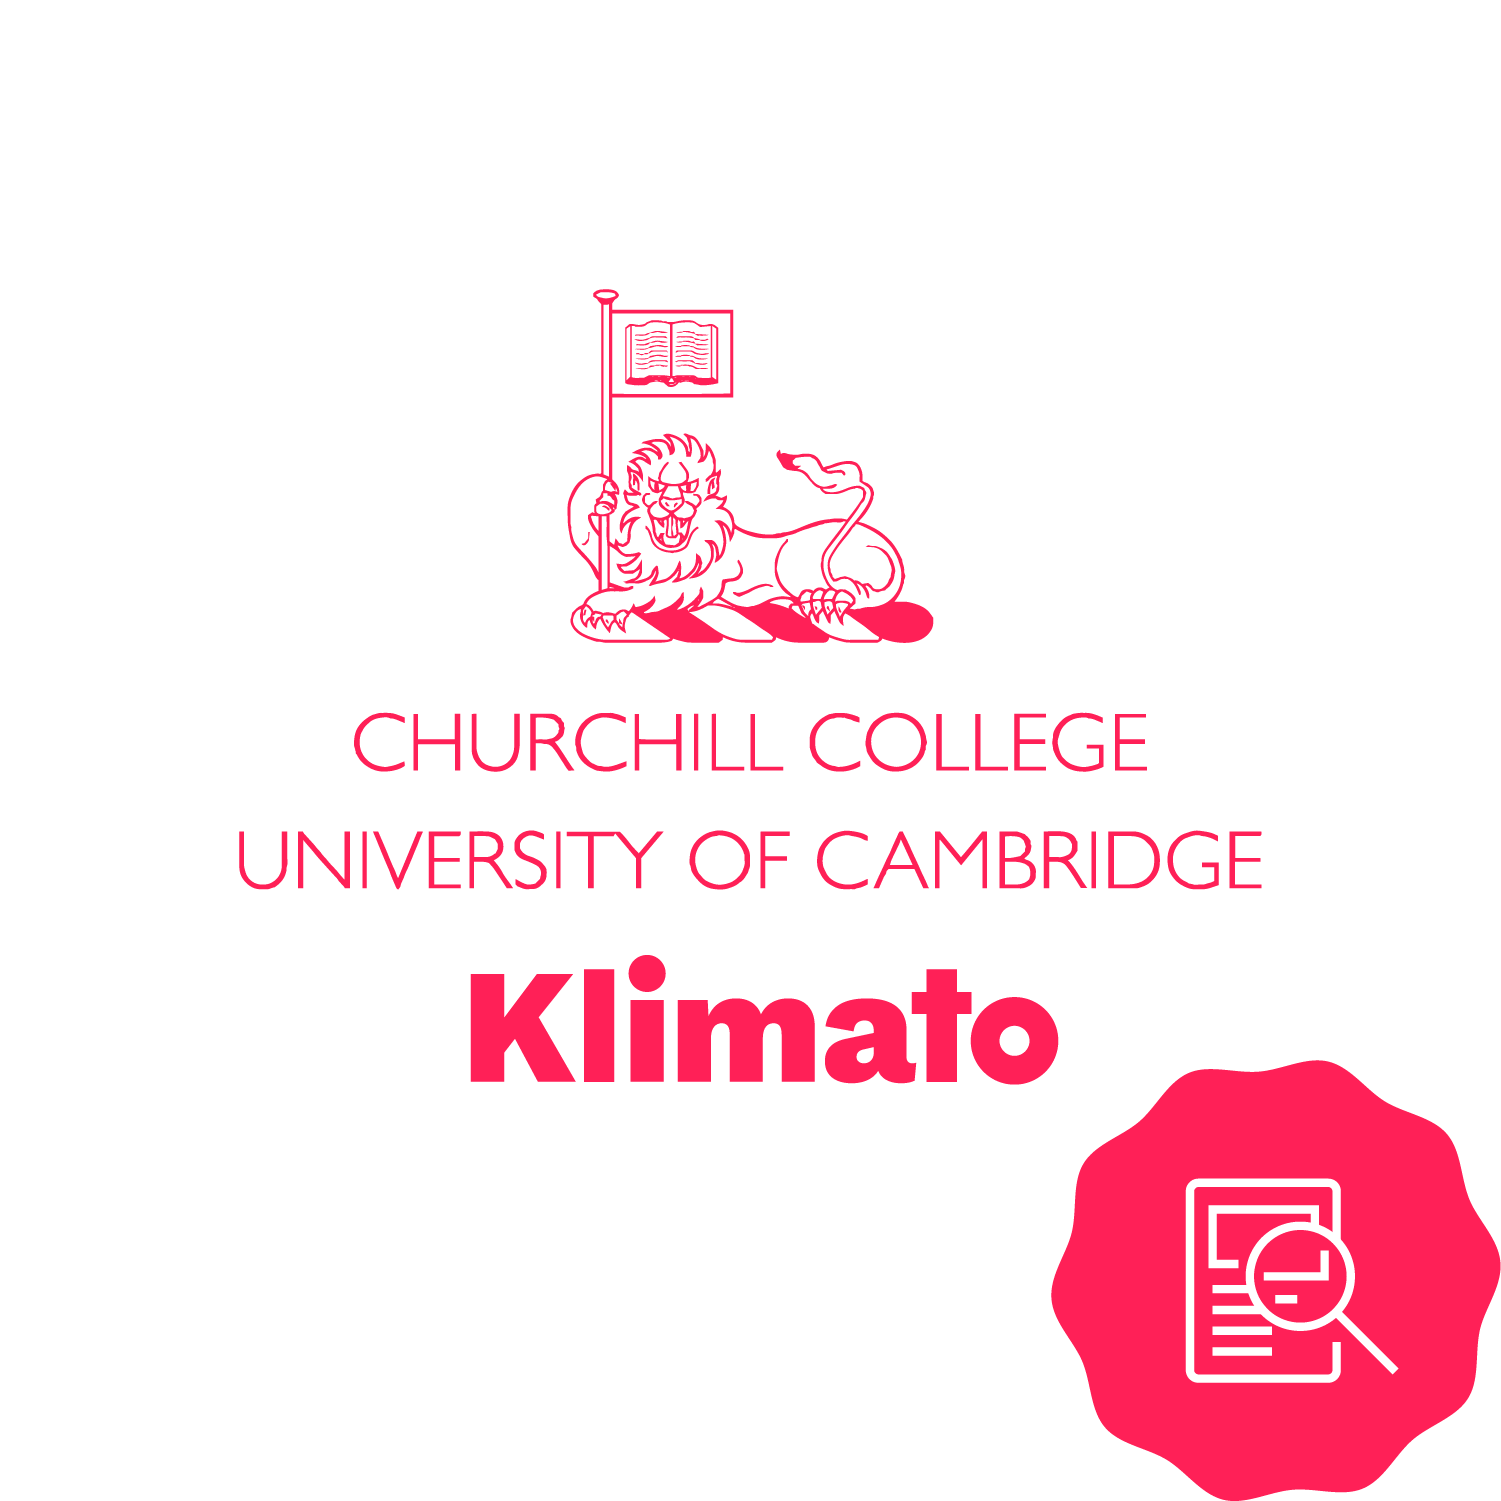 Churchill college and Klimato thumbnail